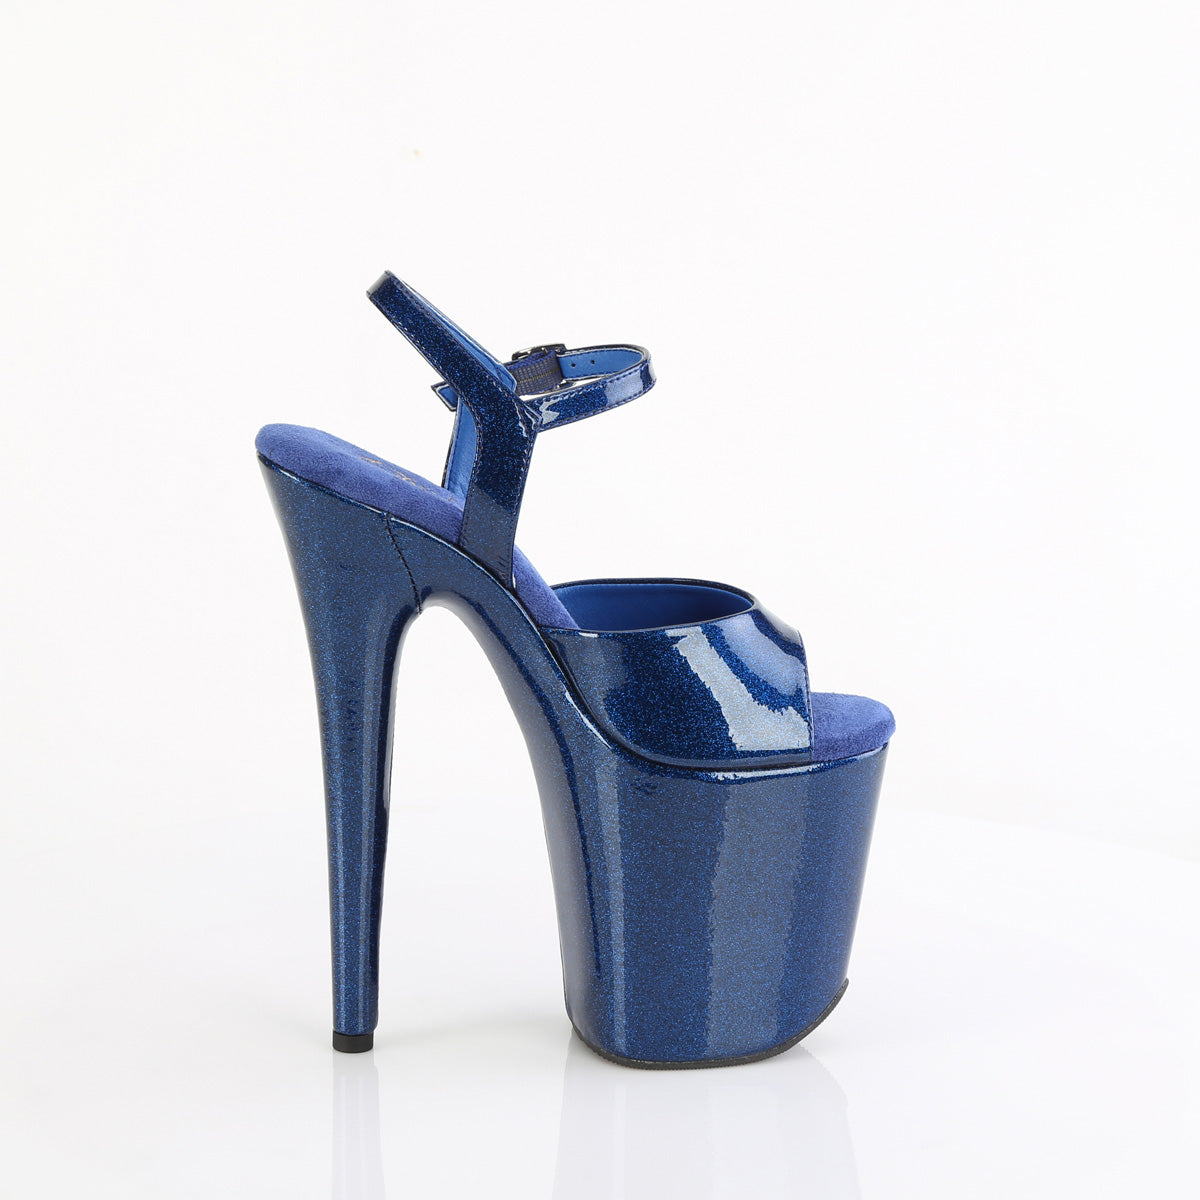 FLAMINGO-809GP - Navy Blue Glitter Patent Heels